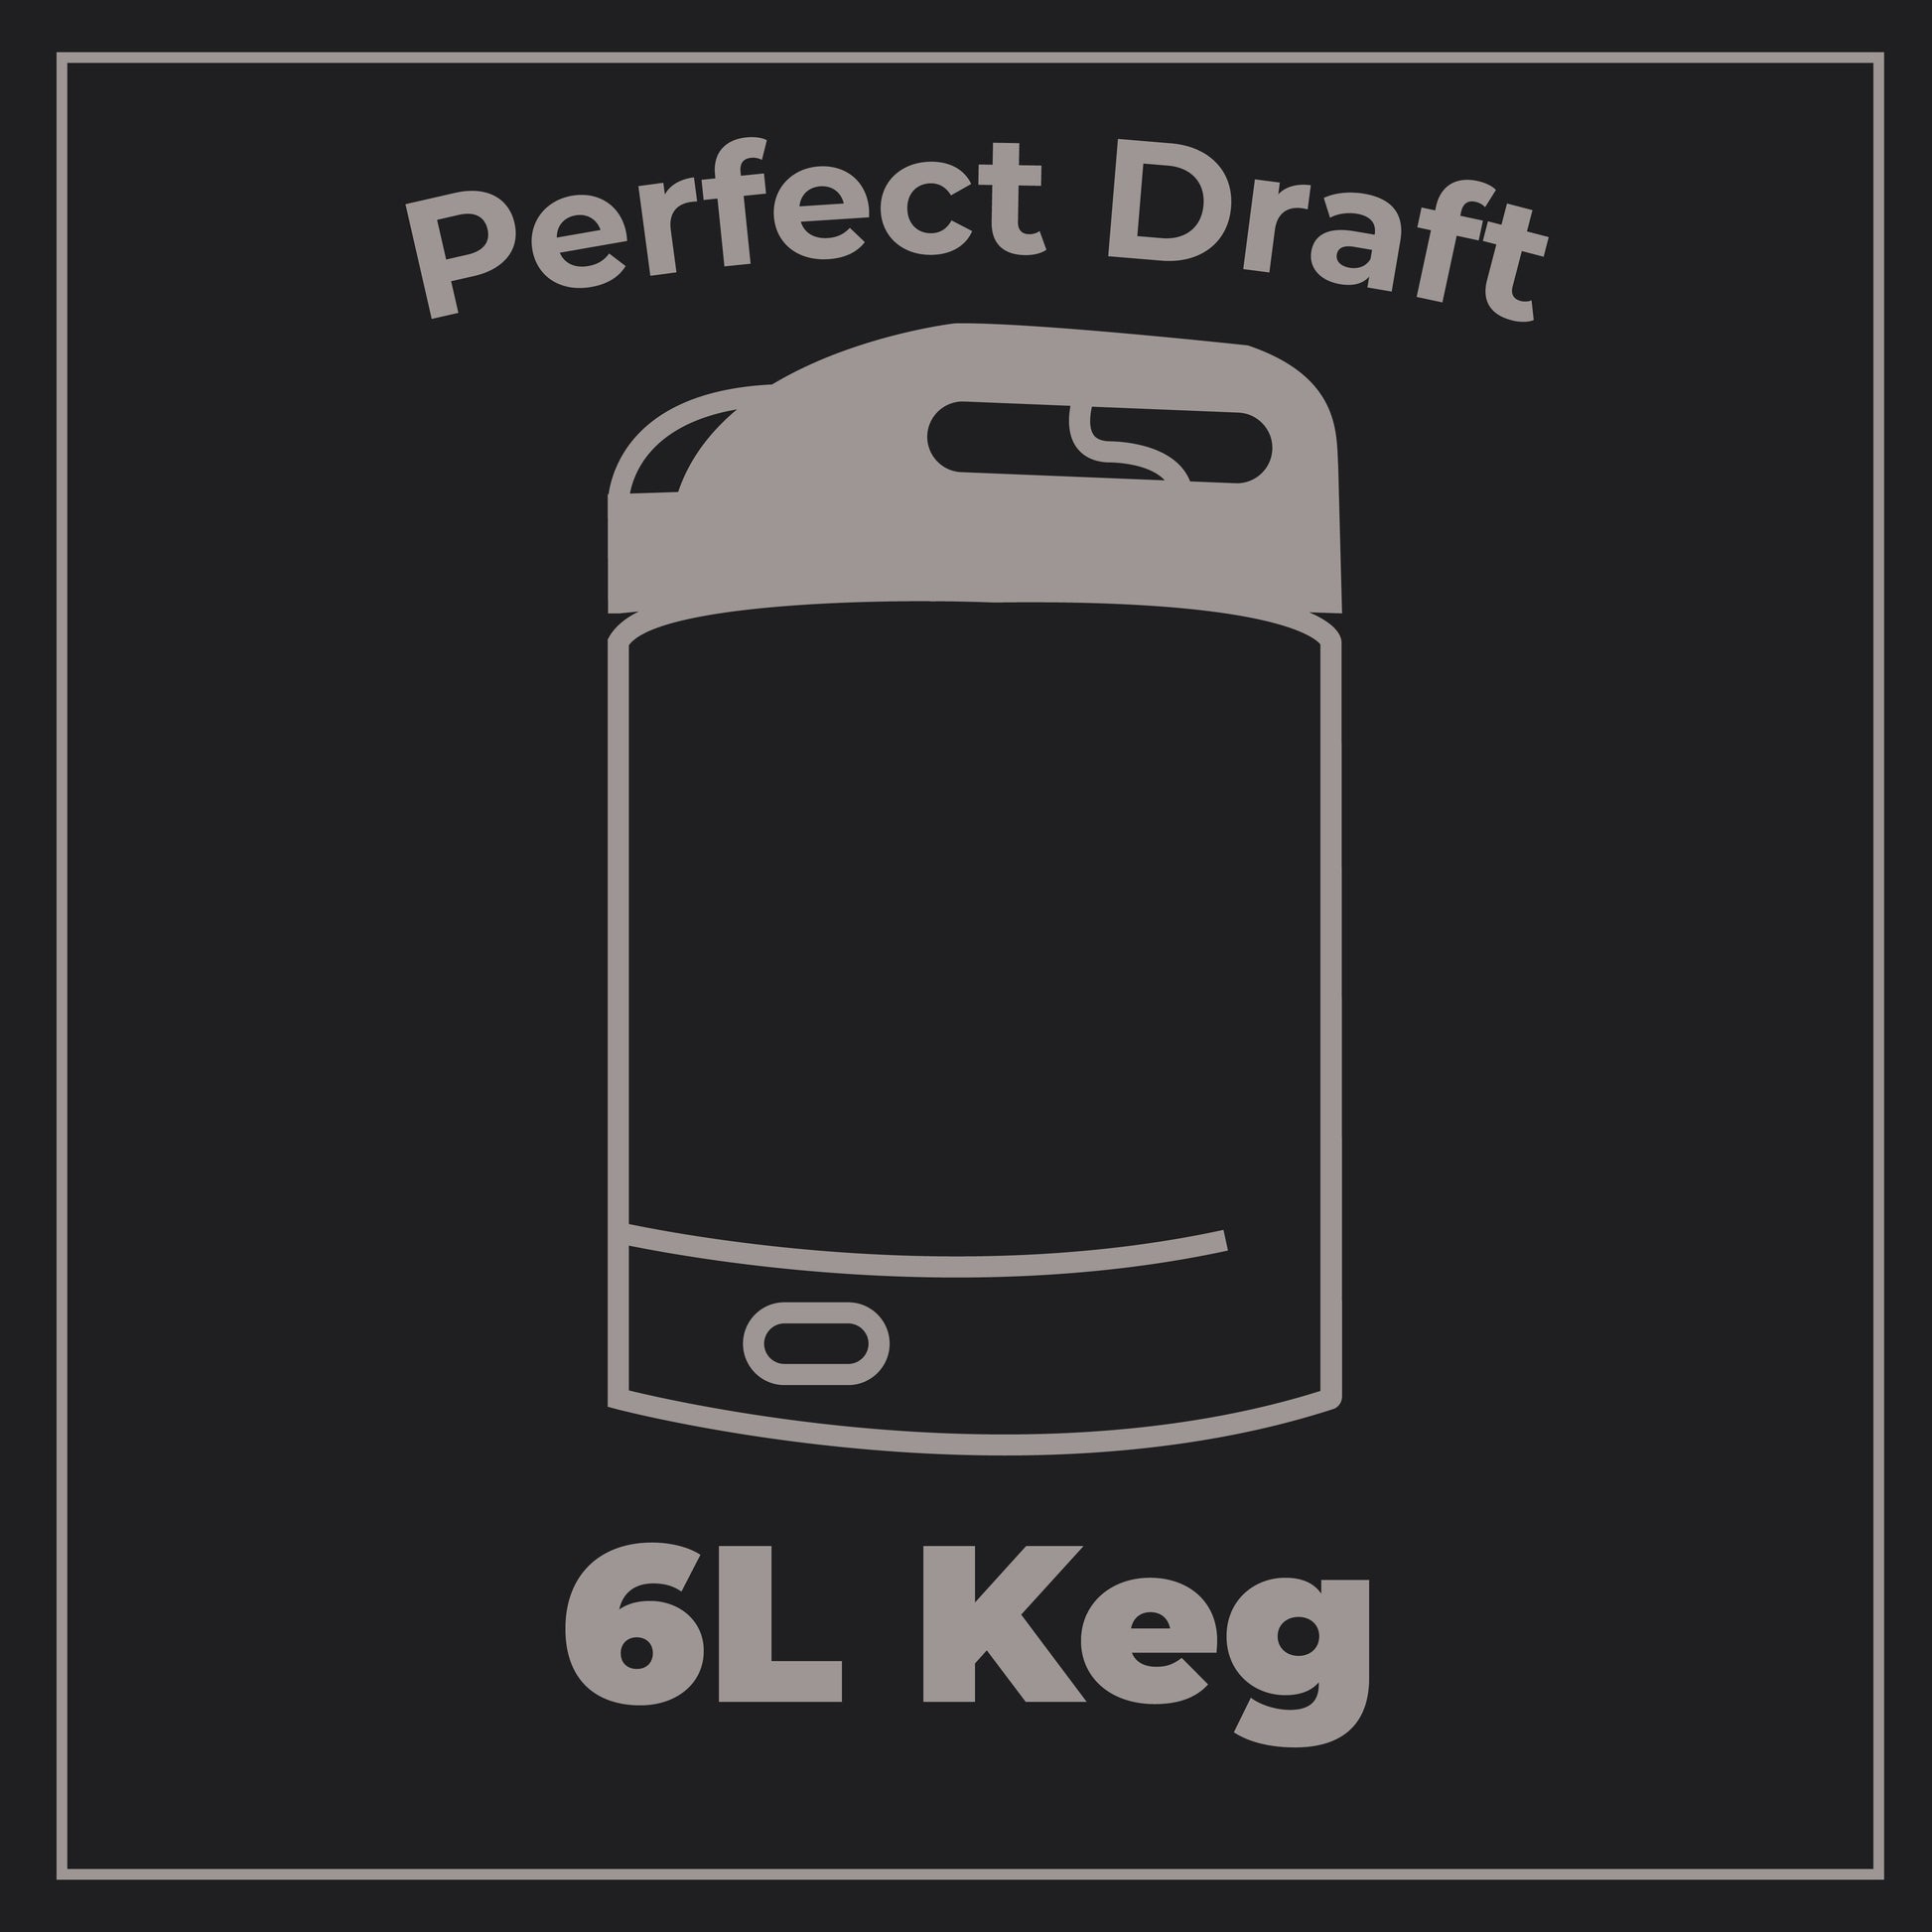 Adnams Ghost Ship PerfectDraft Keg – Pale Ale – 4.5% ABV - 6L PerfectDraft Keg